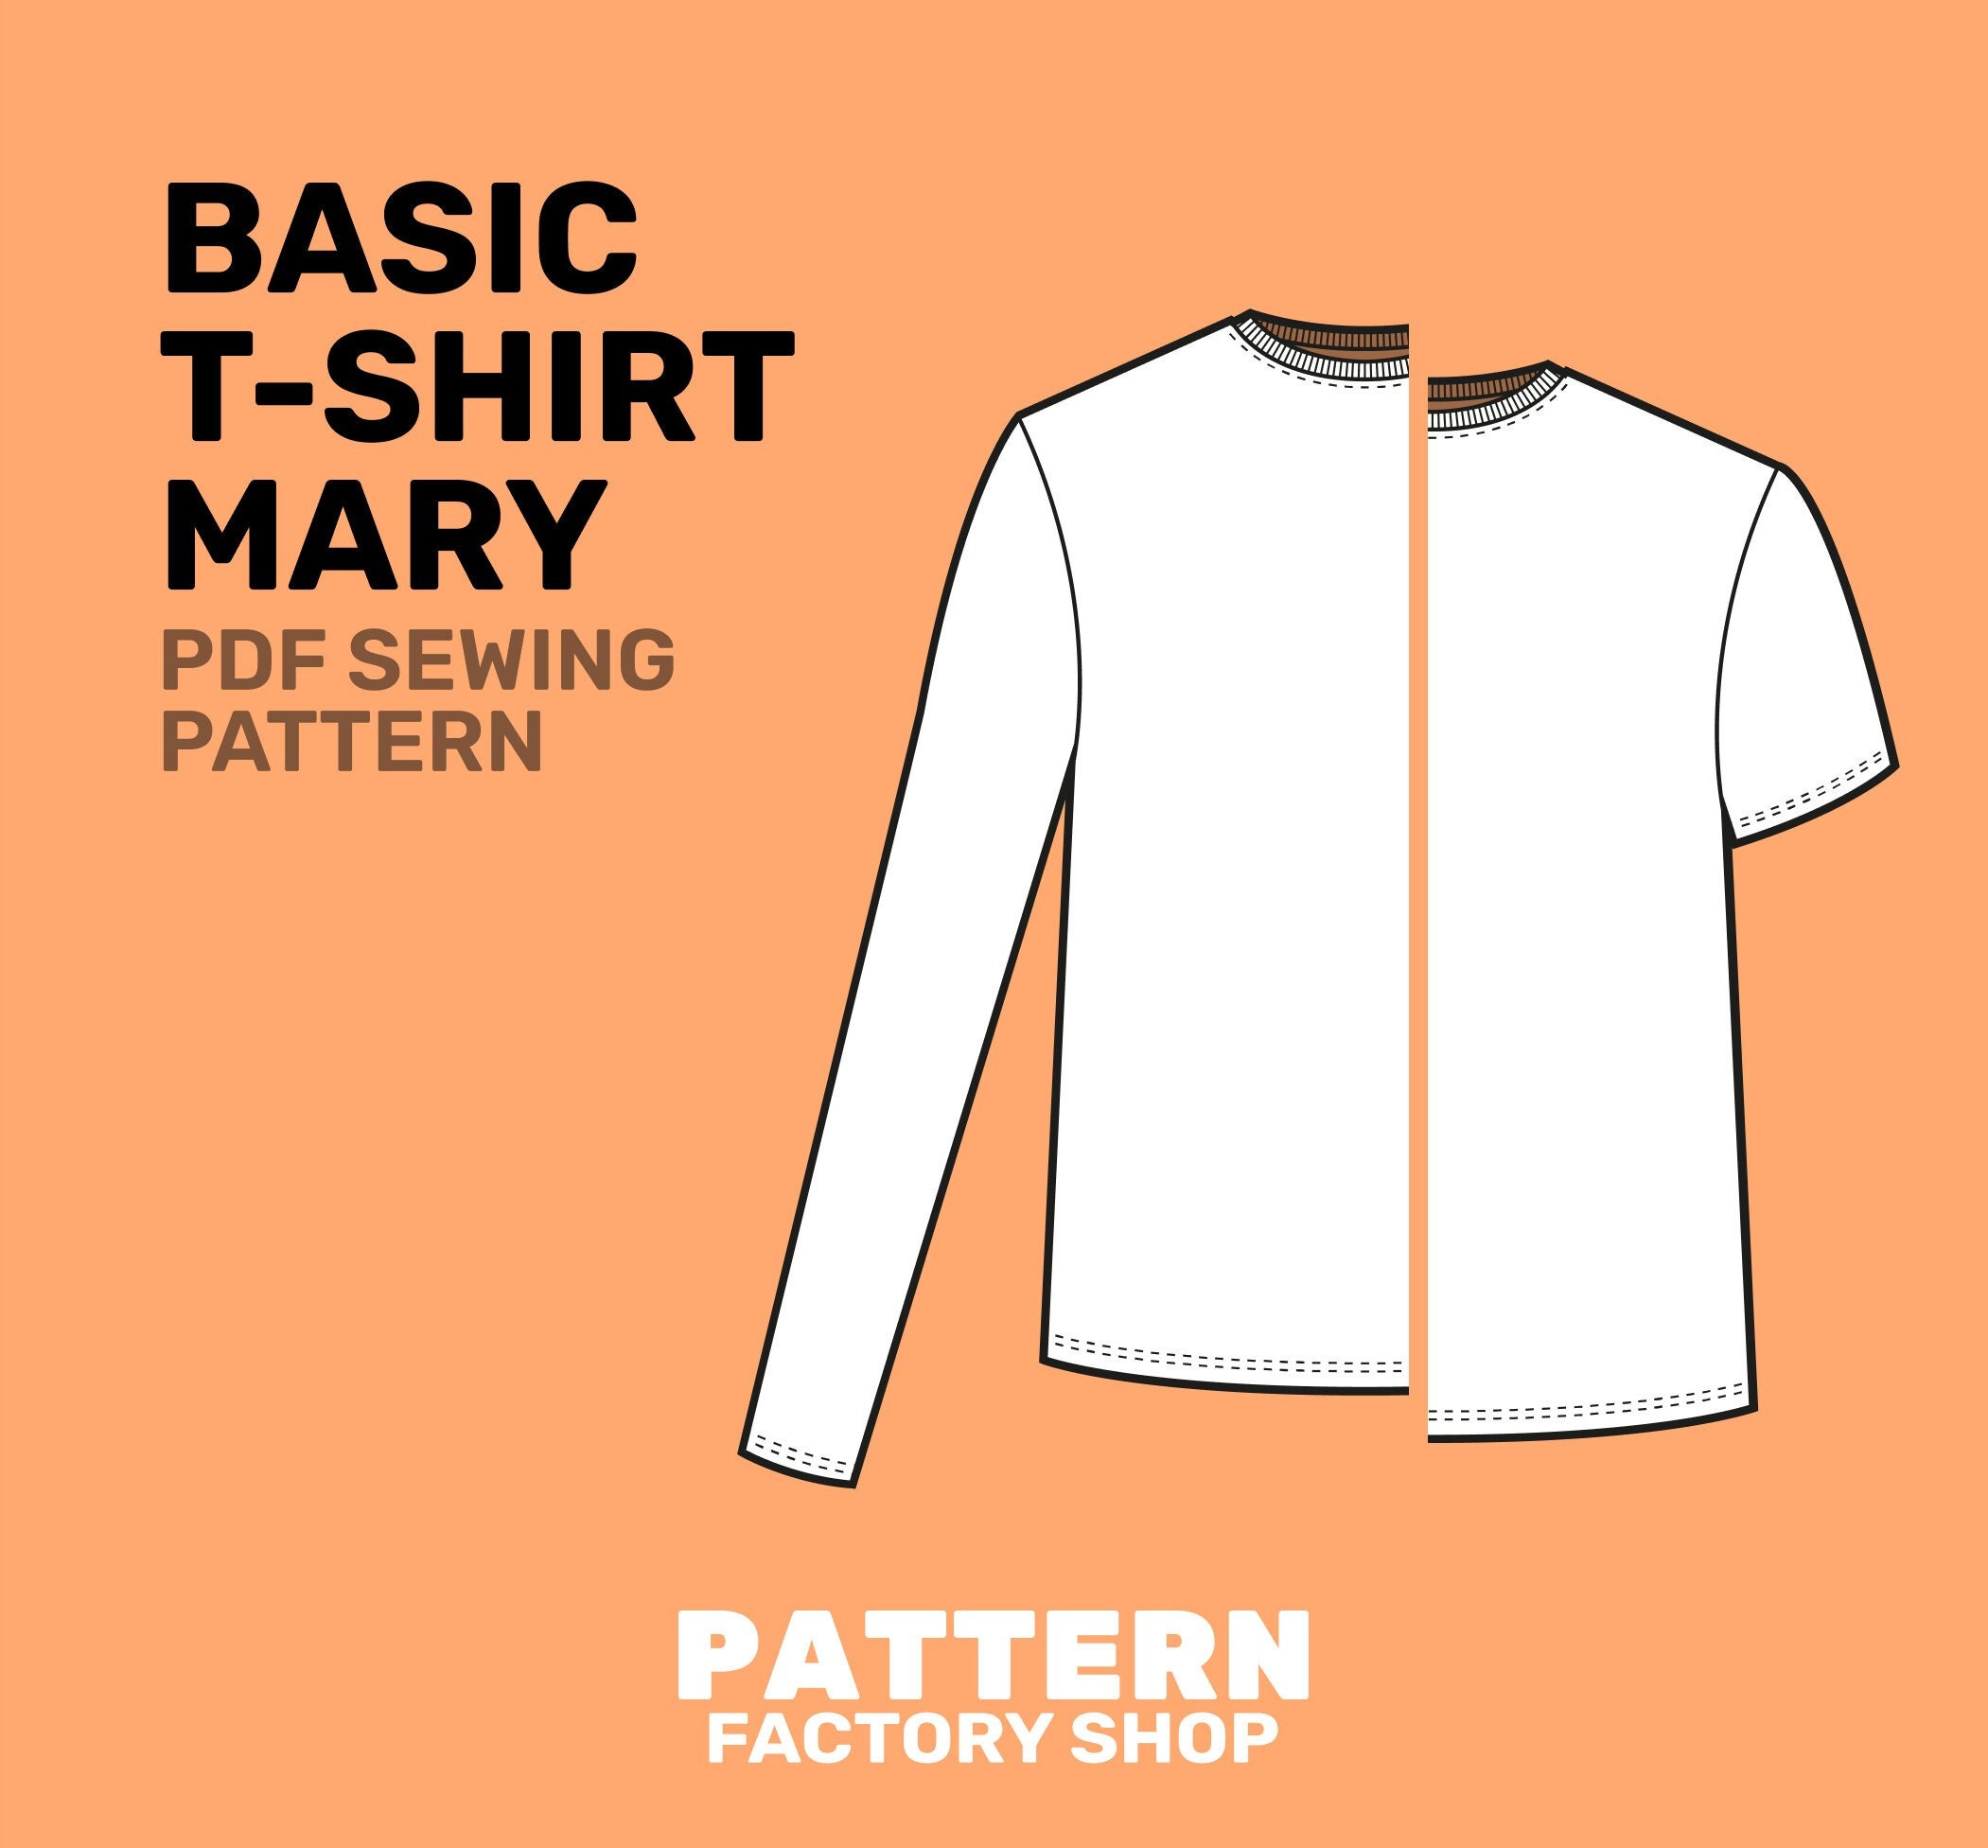 Basic T-shirt Mary Long and Short Sleeve PDF Sewing Pattern Sizes